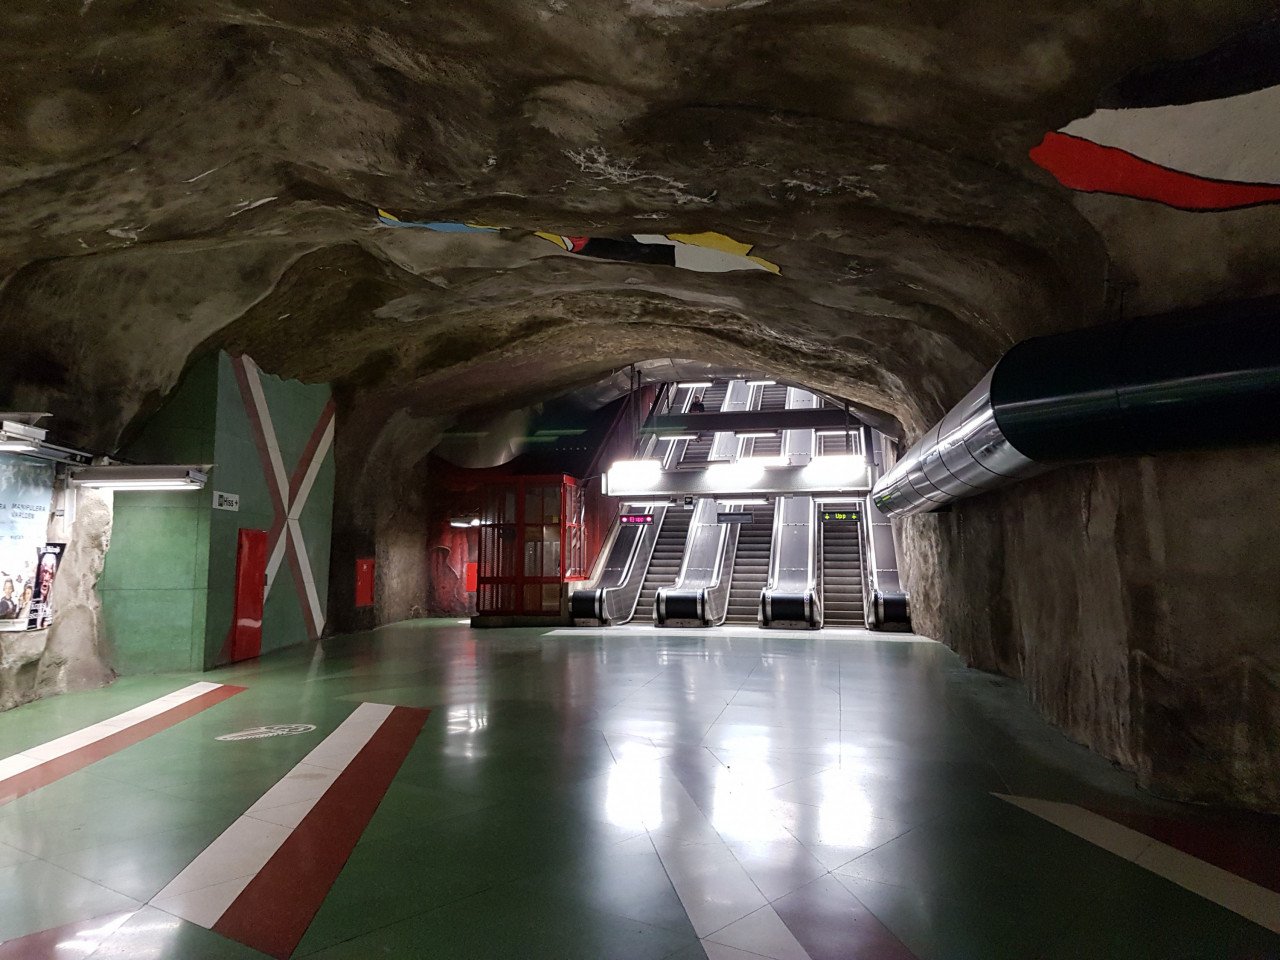 Stesen metro kereta api bawah tanah